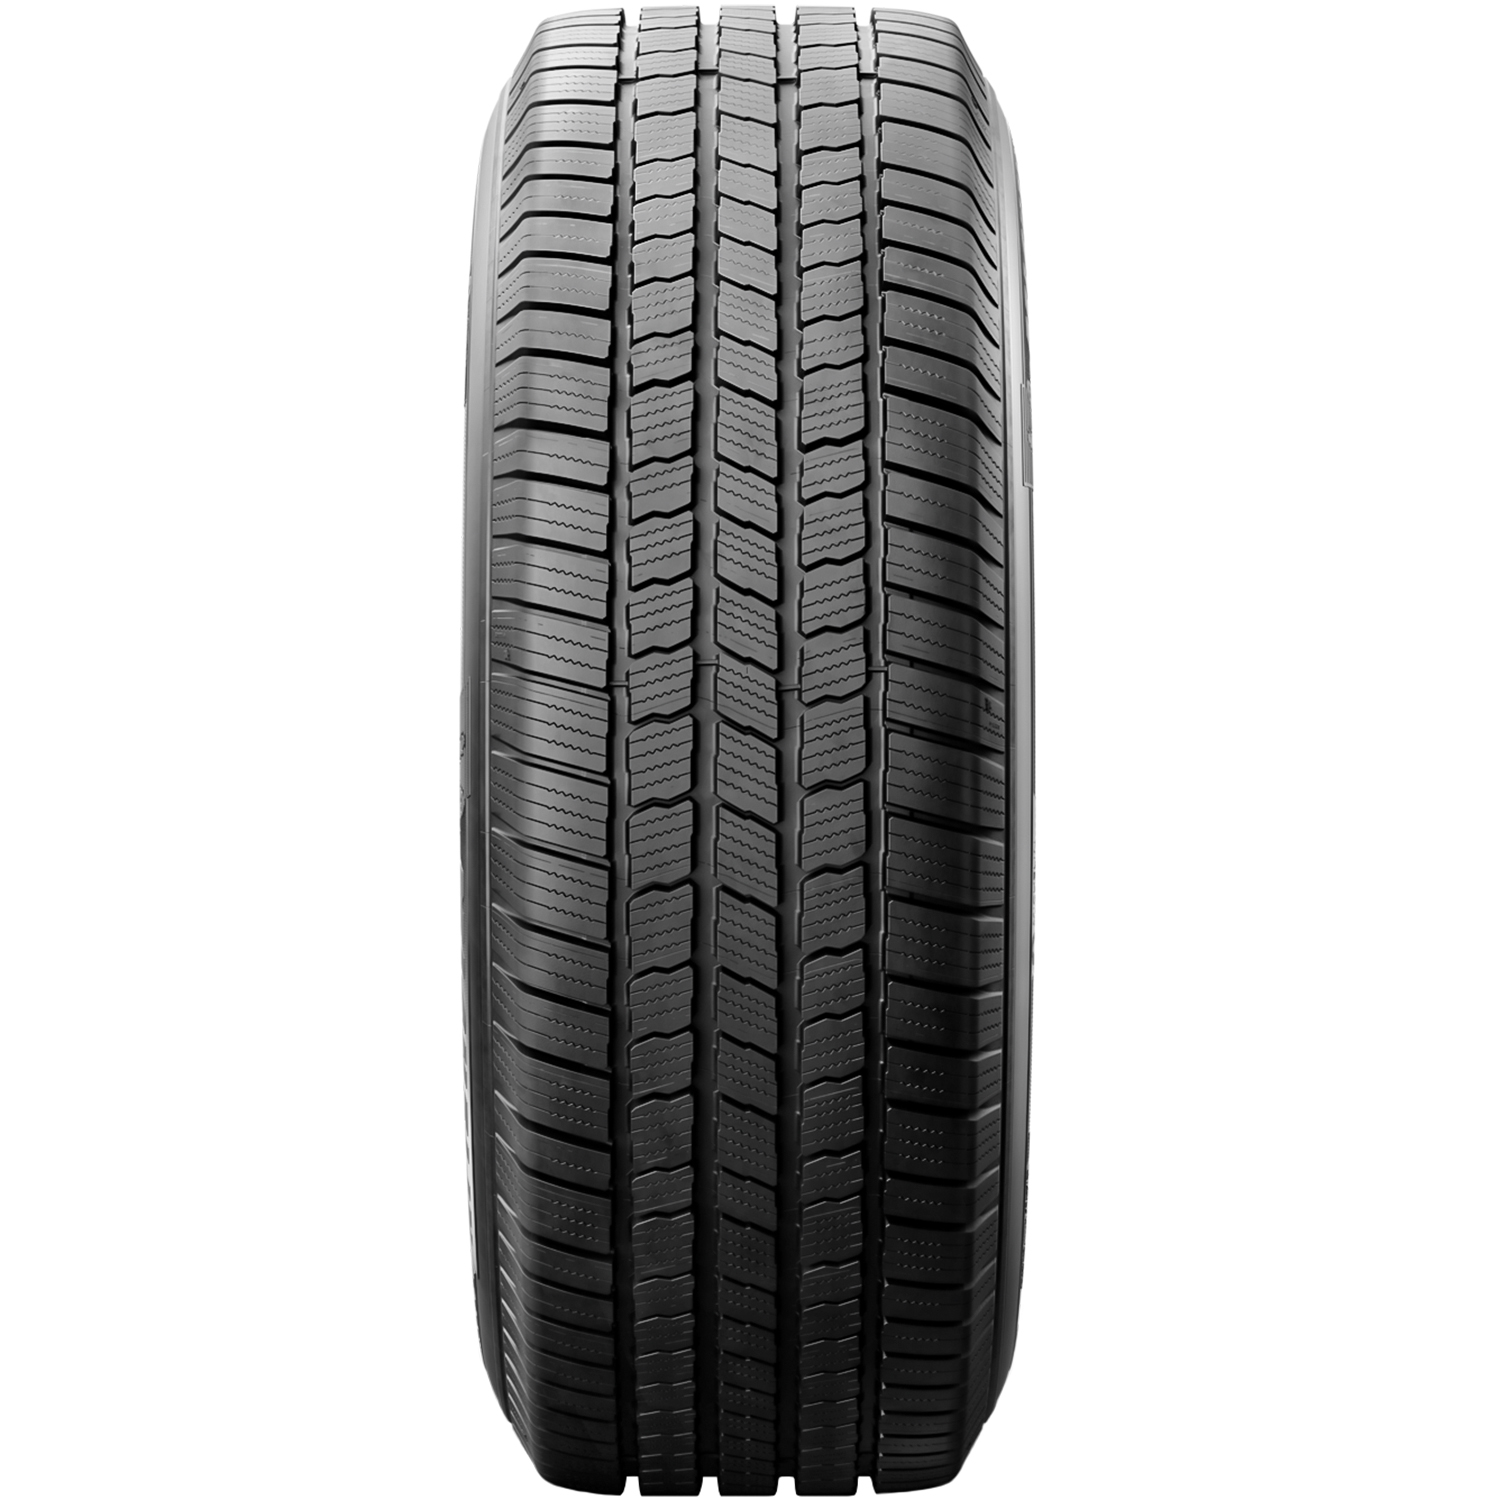 Michelin Defender LTX M/S All Season 235/65R17 104T Light Truck Tire - image 4 of 22